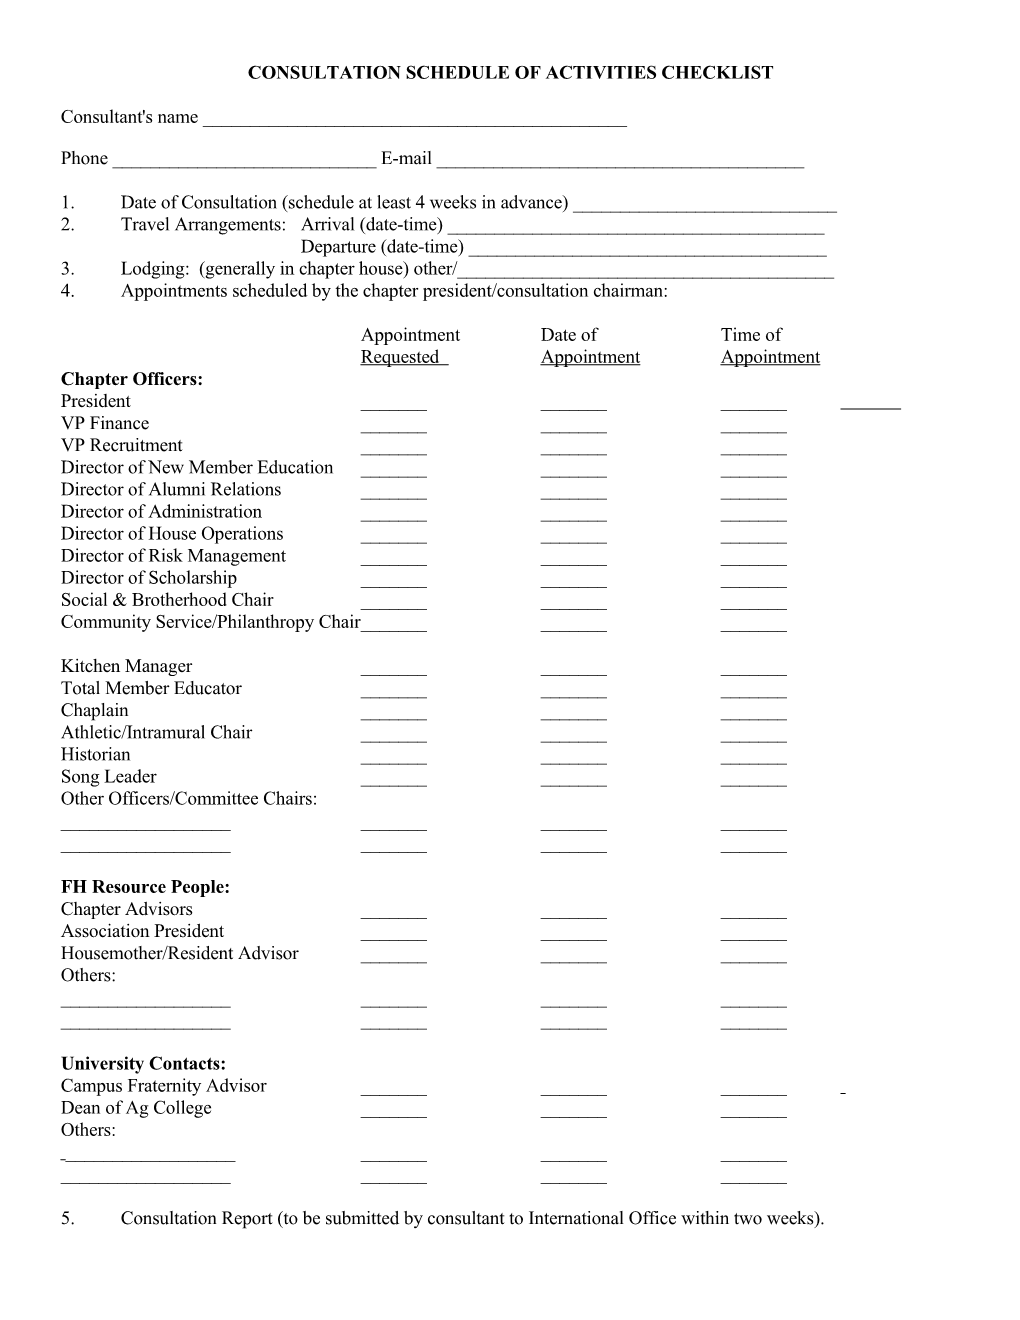 Consultation Schedule of Activities Checklist